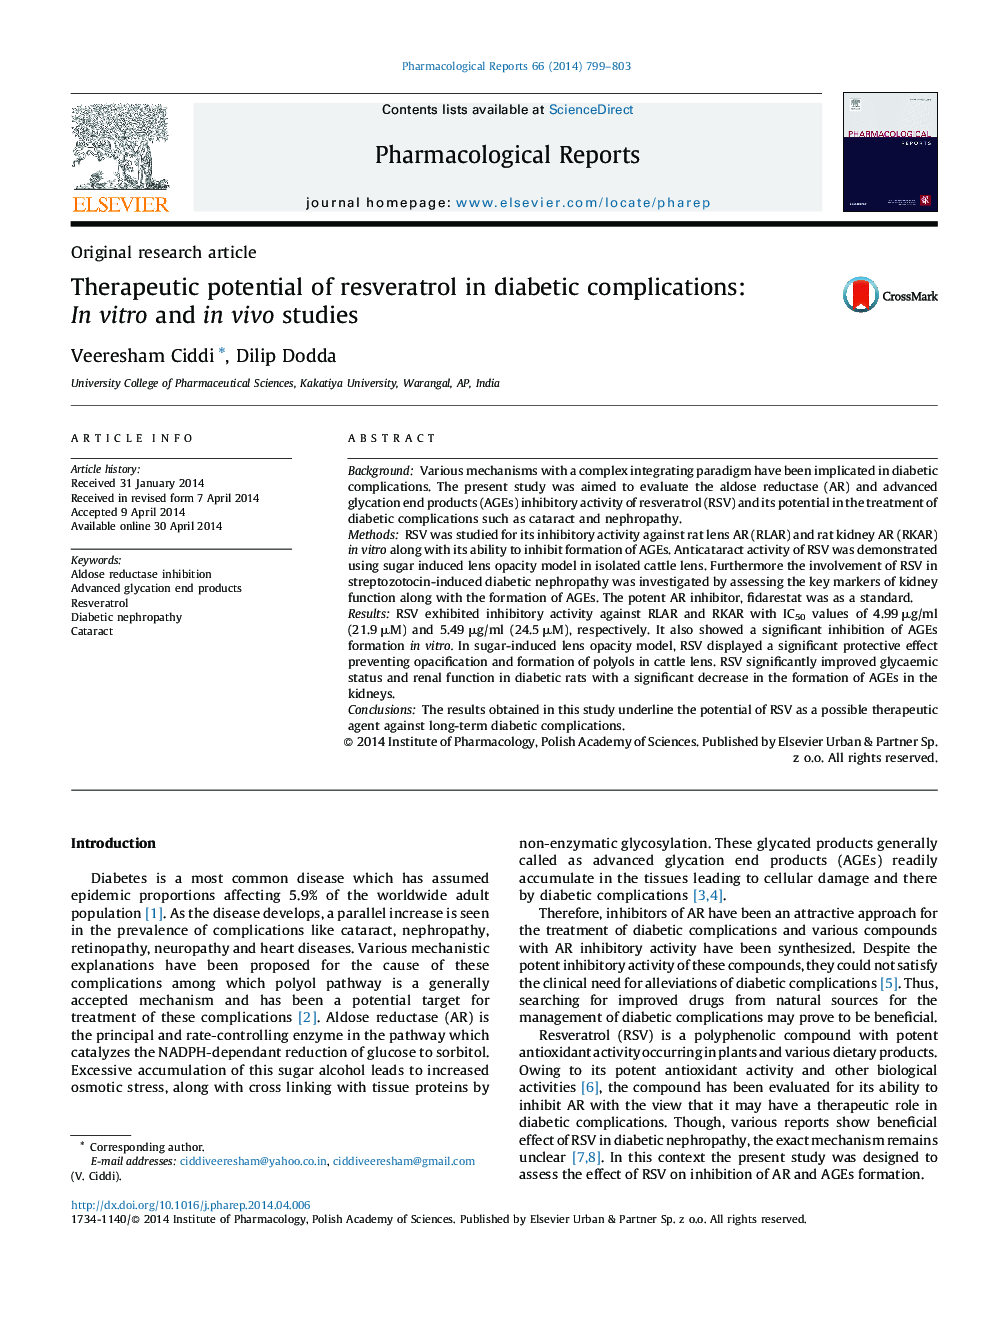 Therapeutic potential of resveratrol in diabetic complications: In vitro and in vivo studies